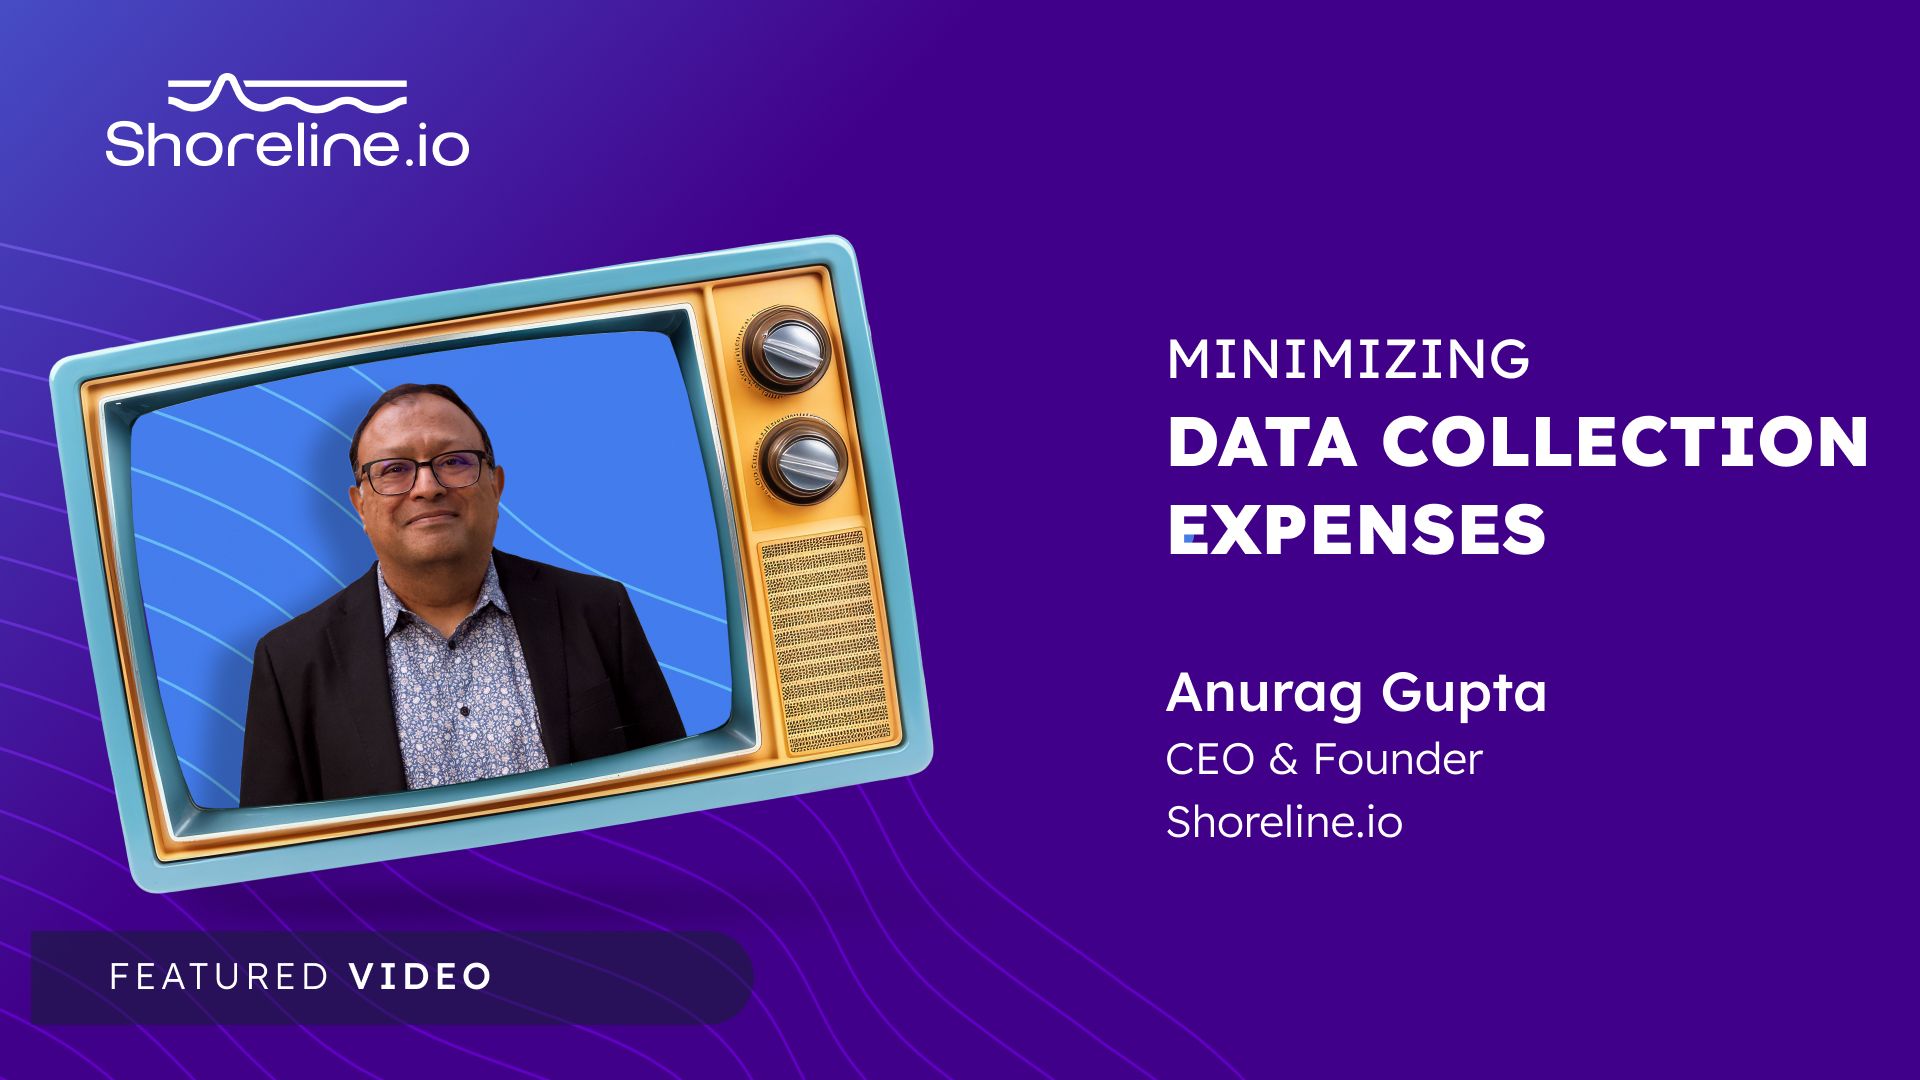 Anurag Gupta, CEO of Shoreline.io on Minimizing Data Collection Expenses